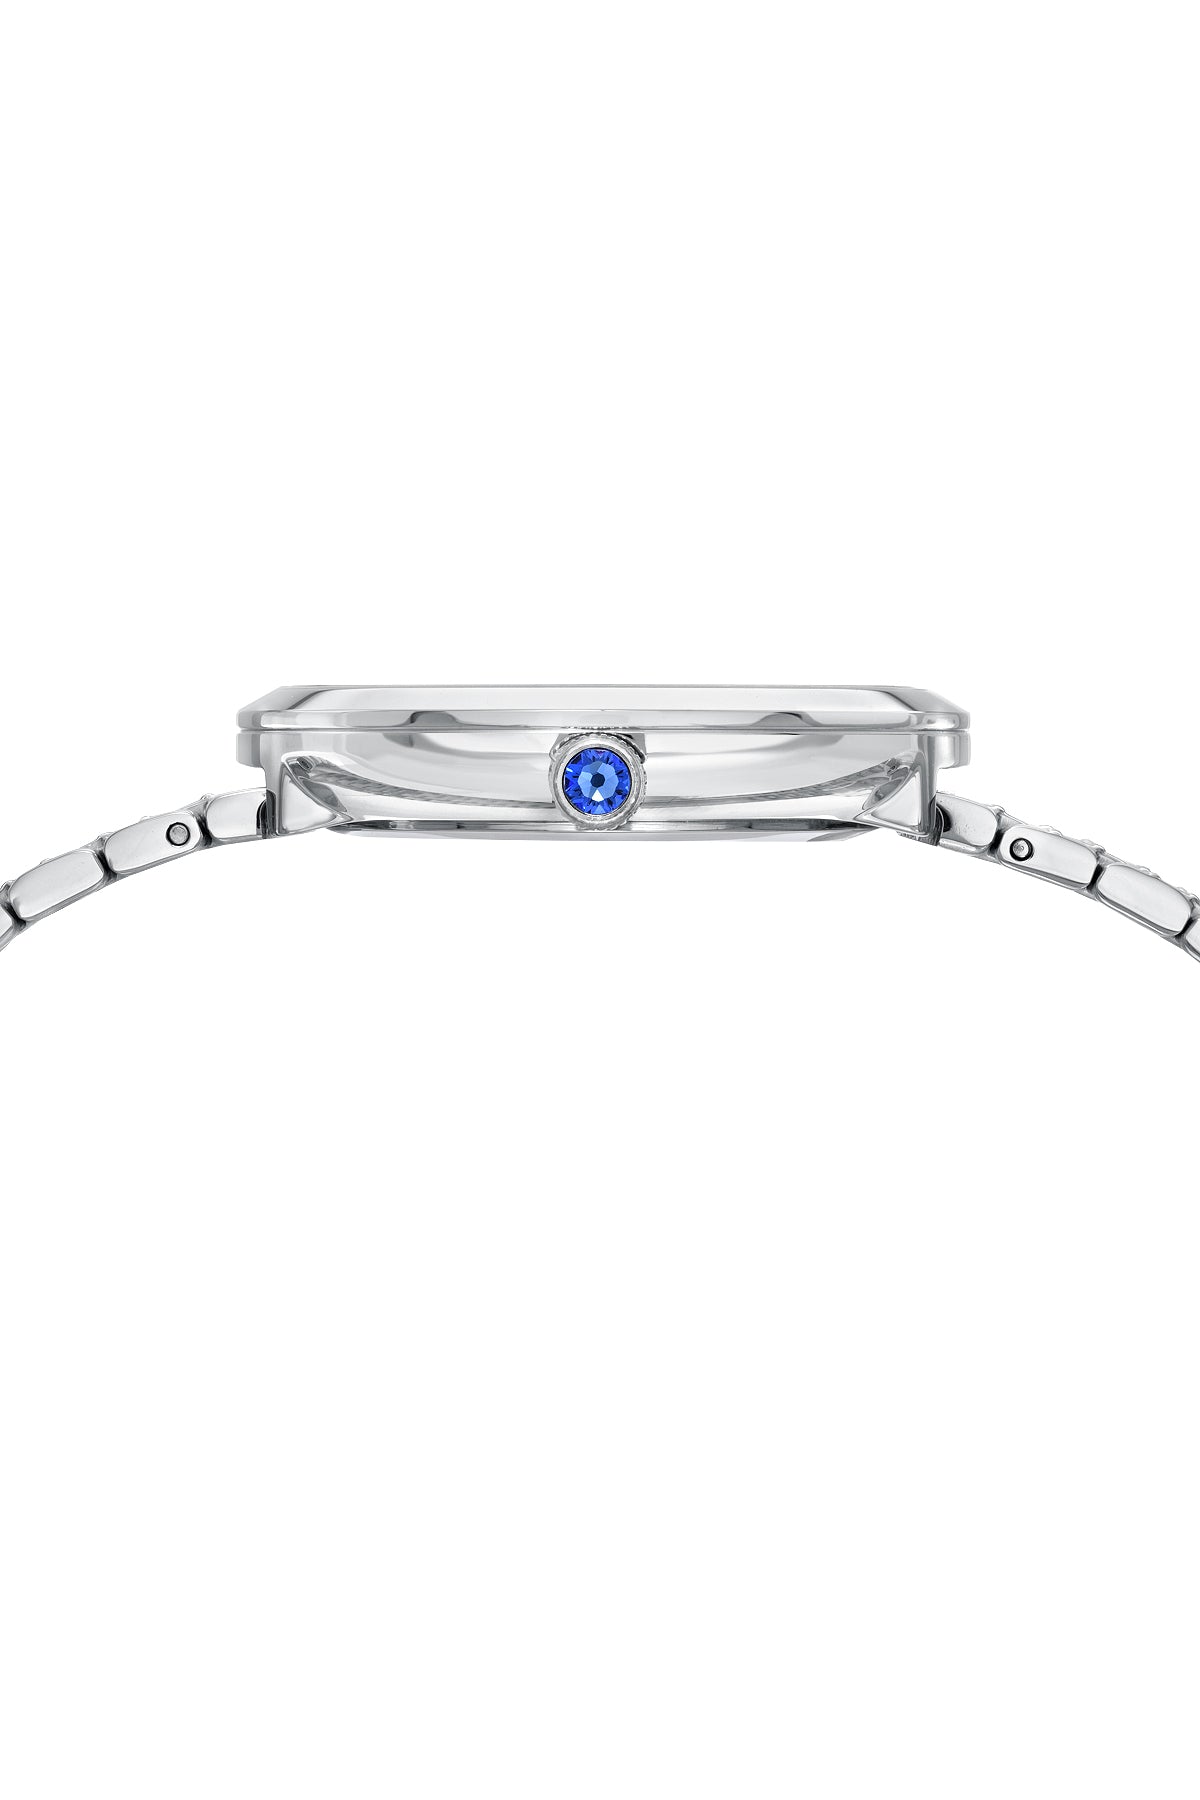 Porsamo Bleu Priscilla Luxury  Women's Stainless Steel Watch, Silver, White 931APRS